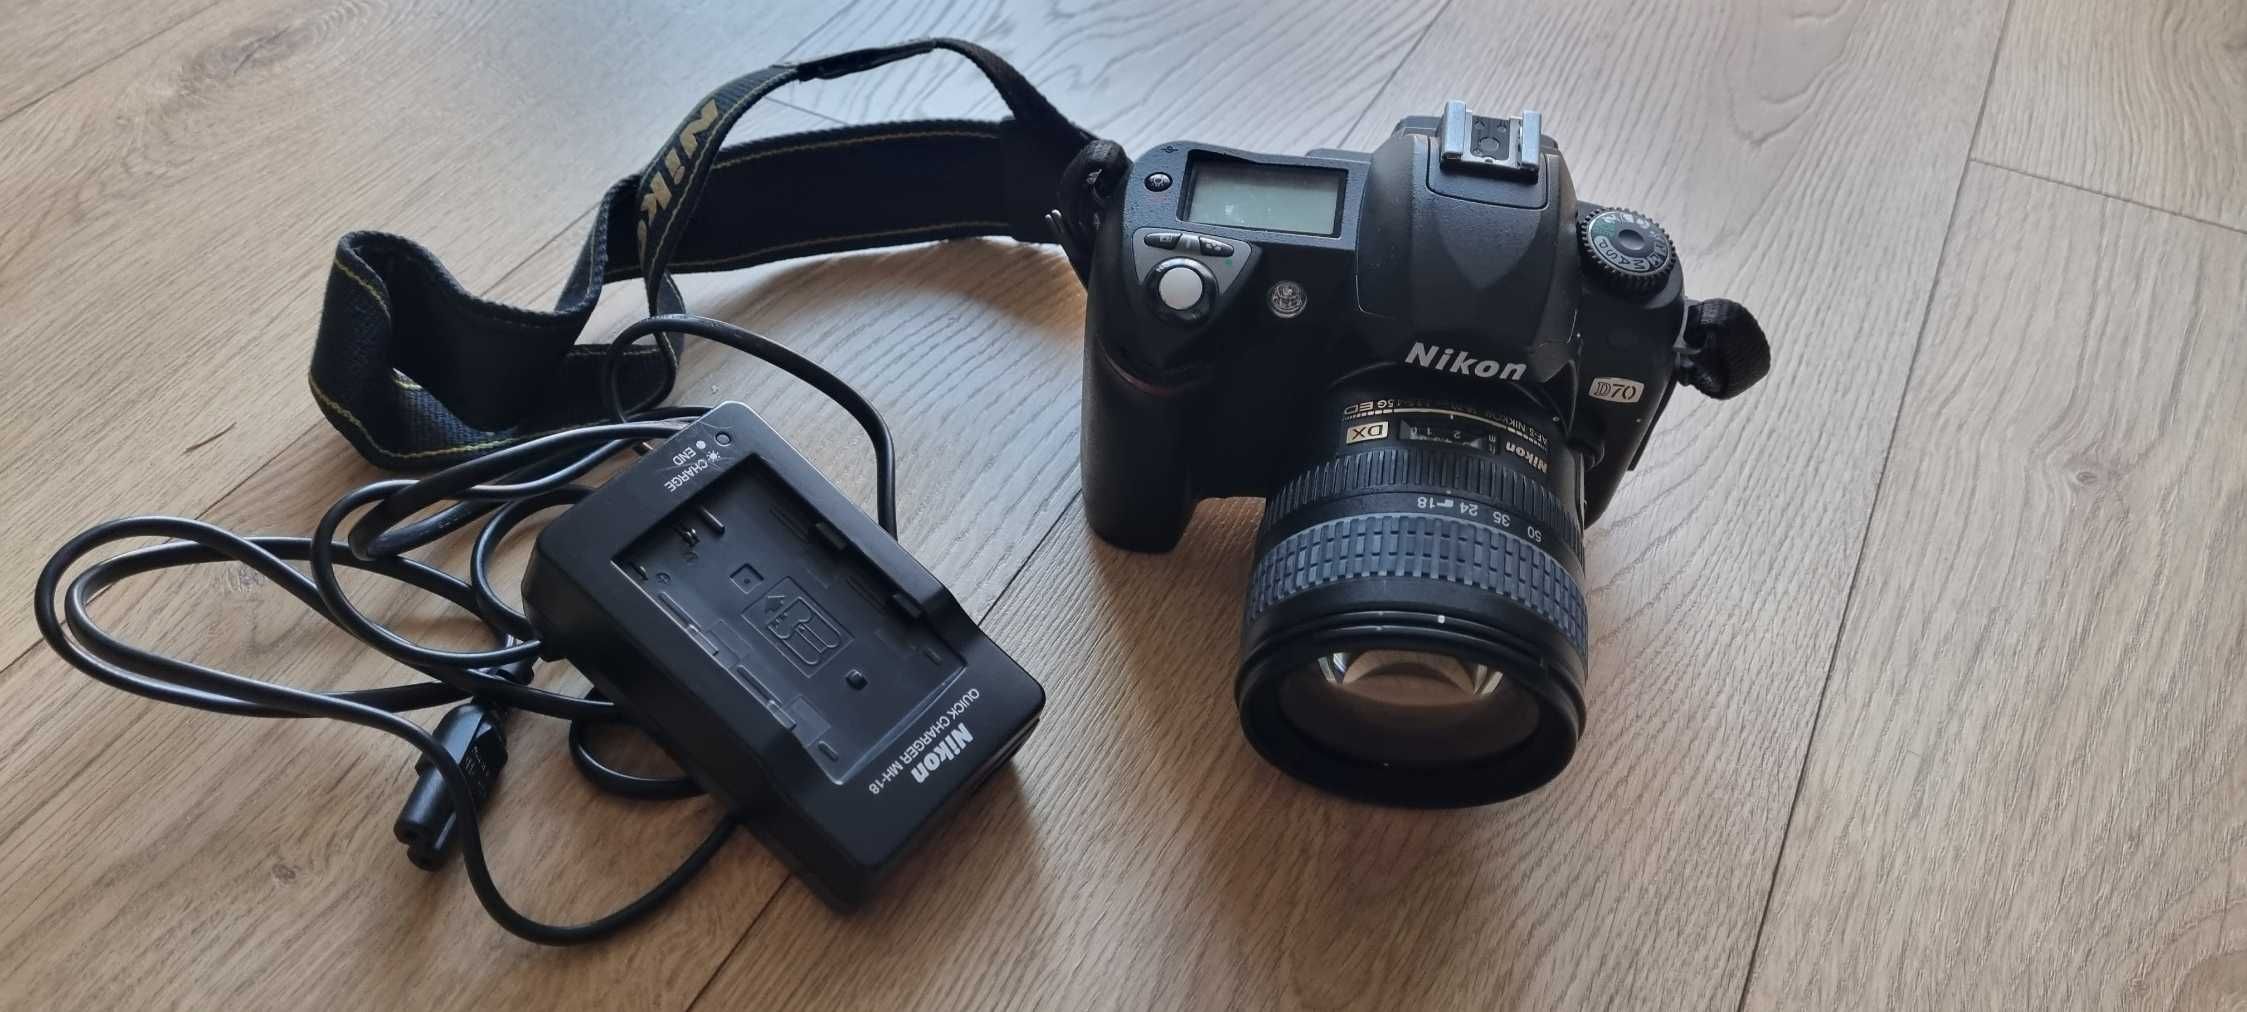 Nikon d70 obiekty Nikkor 18-70 AFS